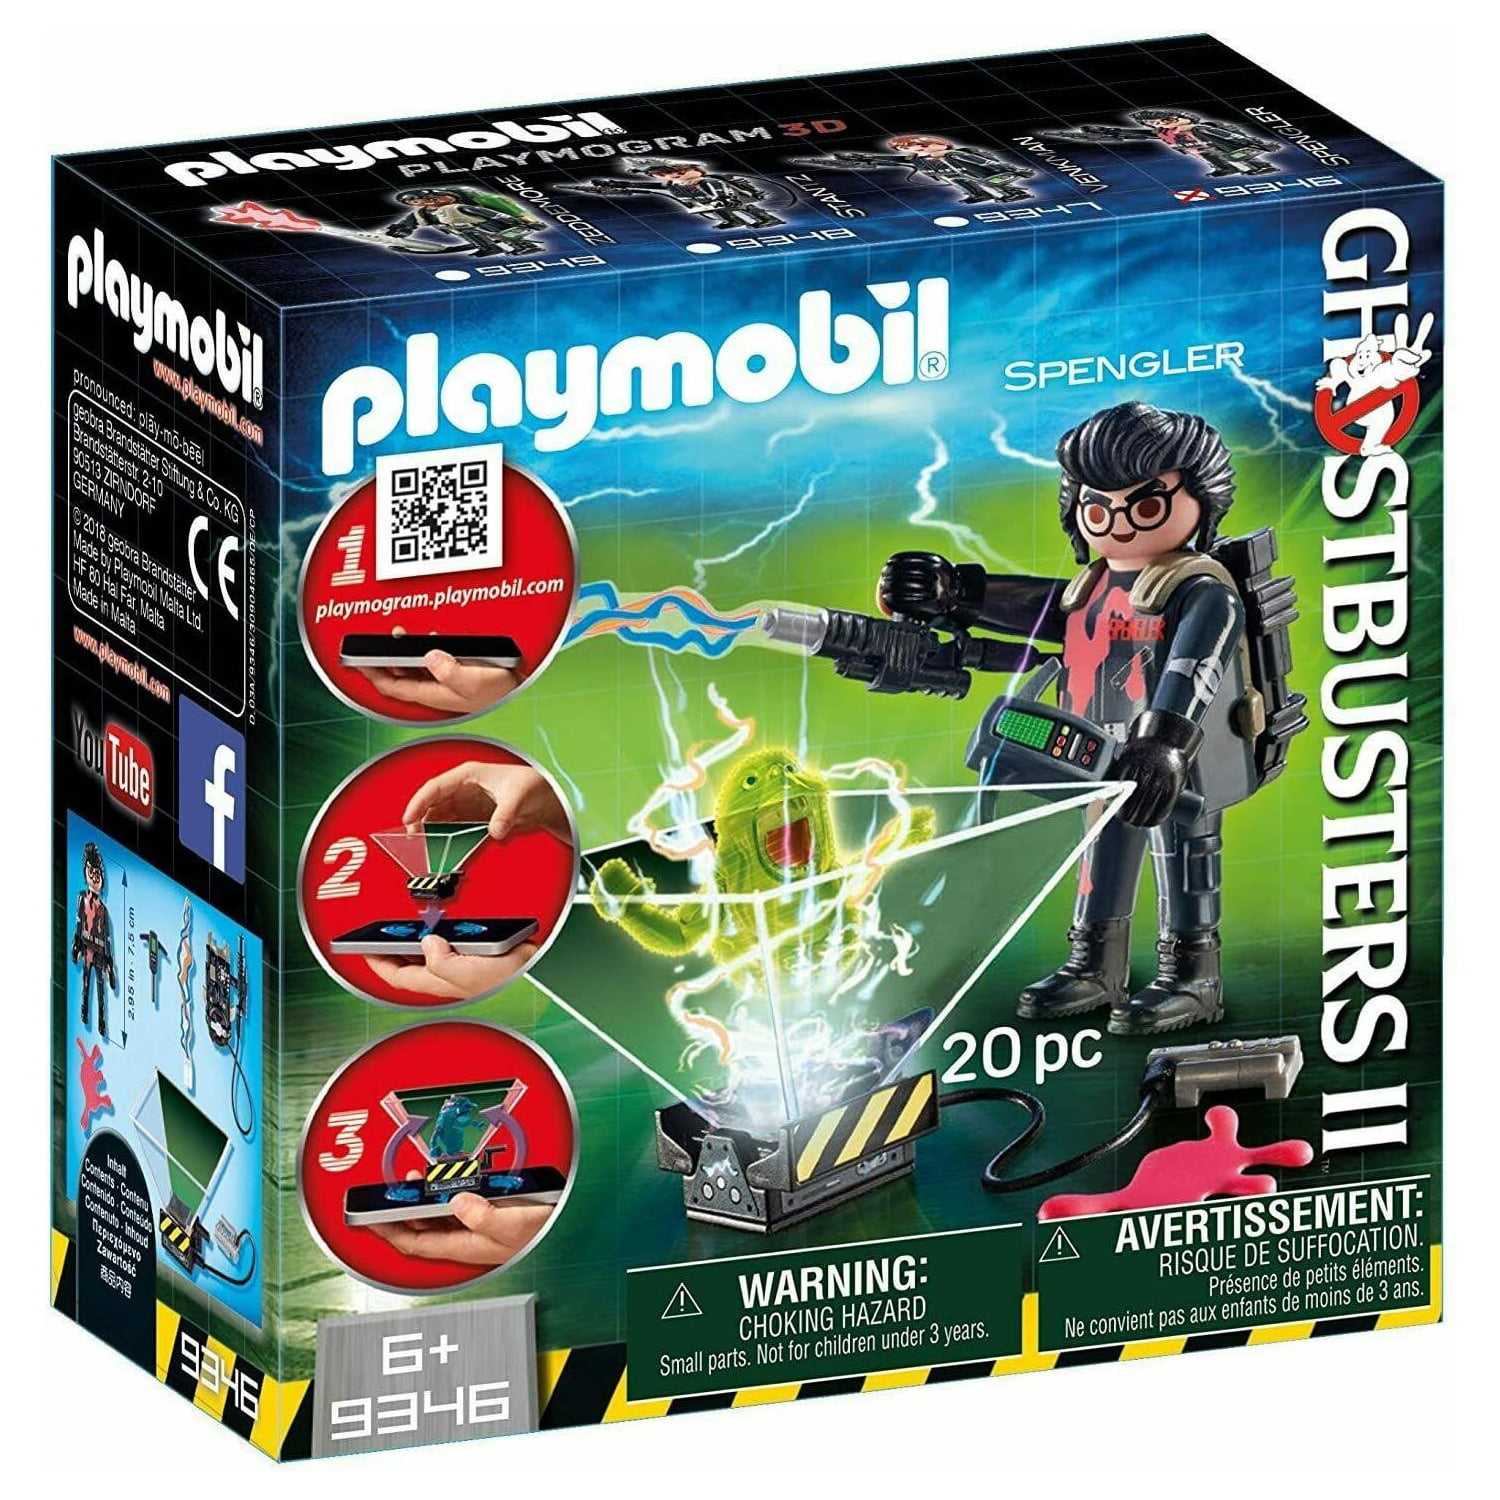 PLAYMOBIL - GHOSTBUSTERS - PLAYMOGRAM 3D - SPENGLER - 9346